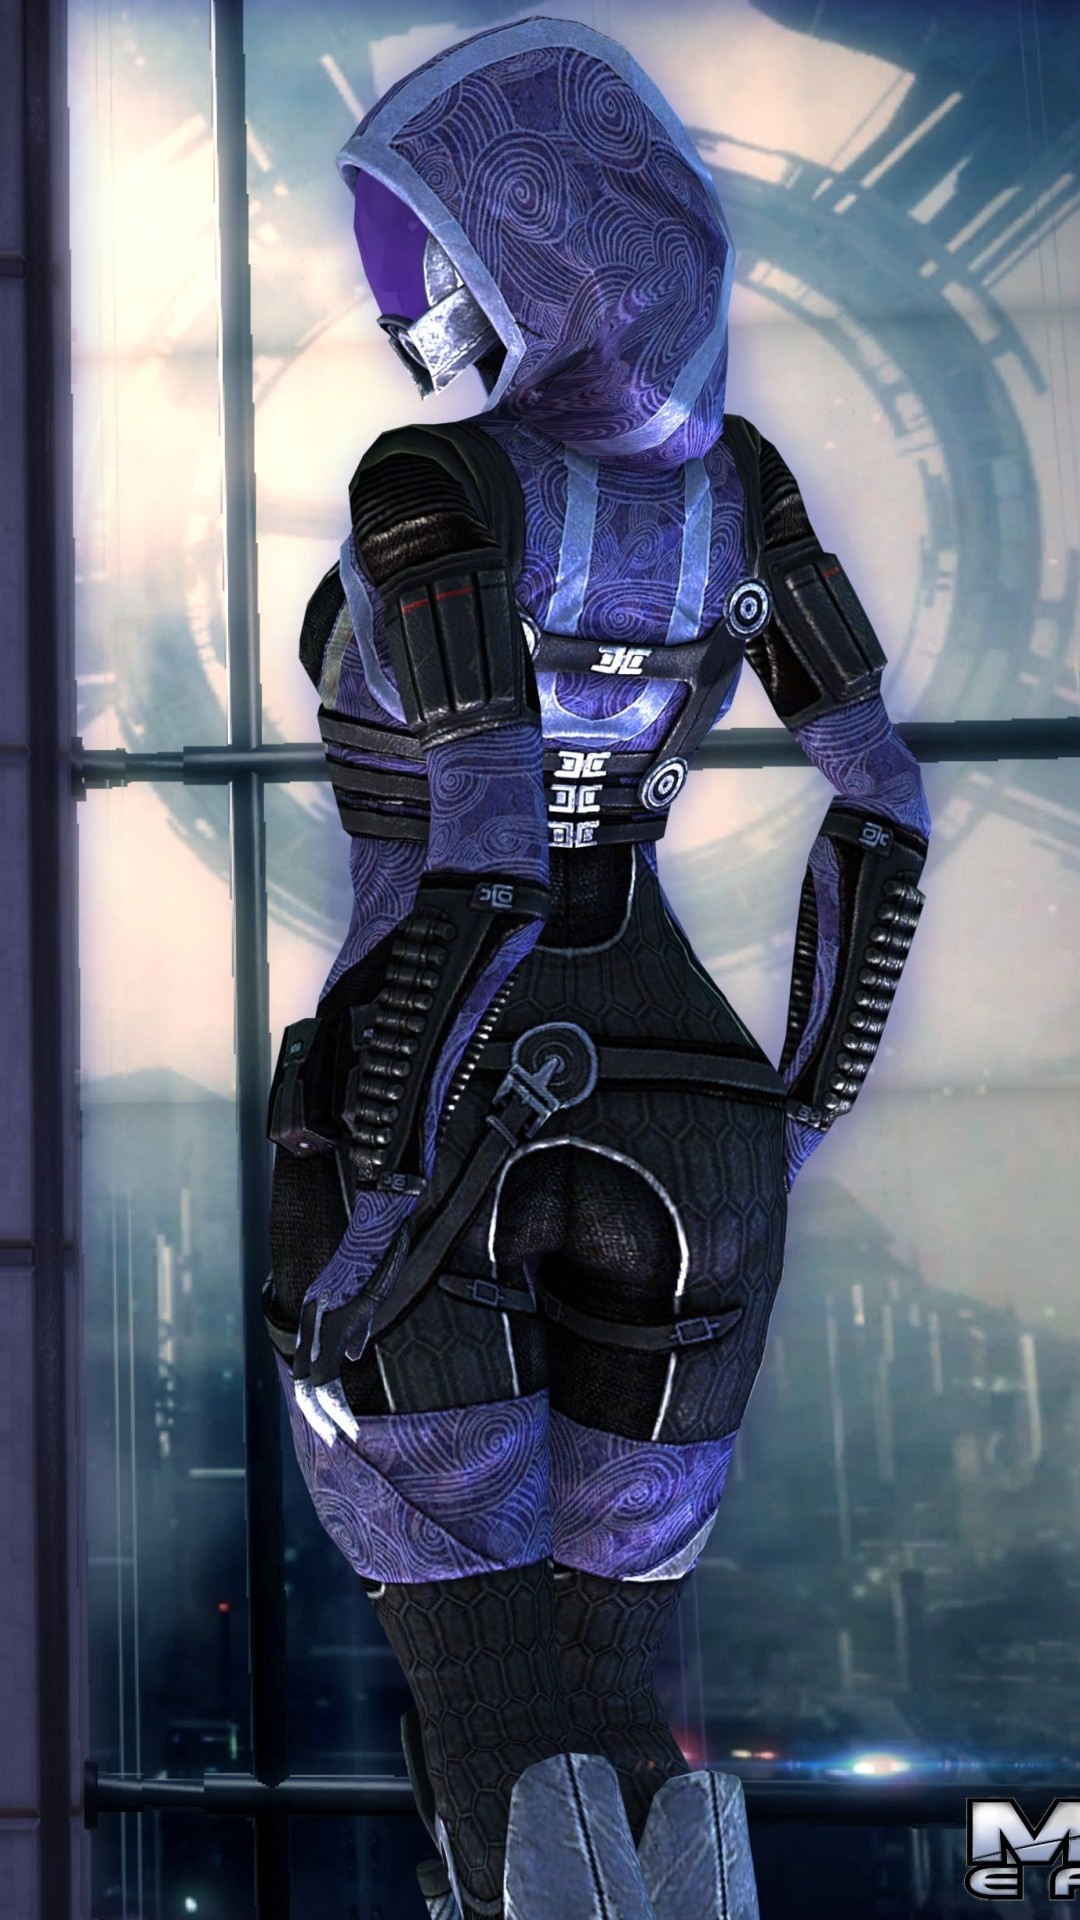 Free Download Wallpaper Mask Alien Mass Effect Bioware Tali Quarian [1332x850] For Your Desktop